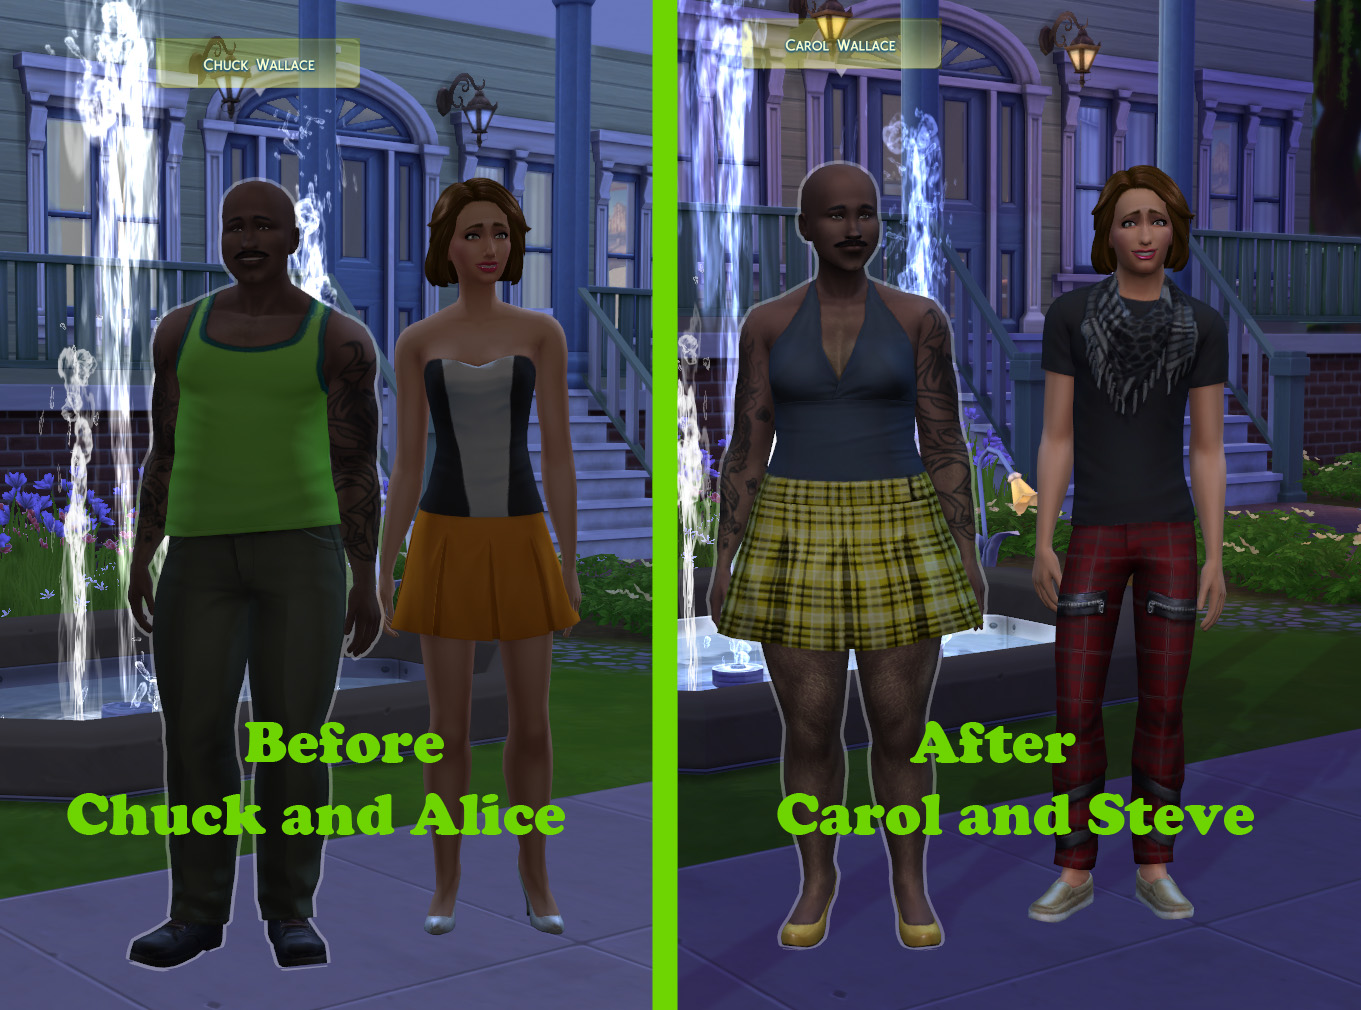 Mod The Sims - Change Sim Name or Gender v8